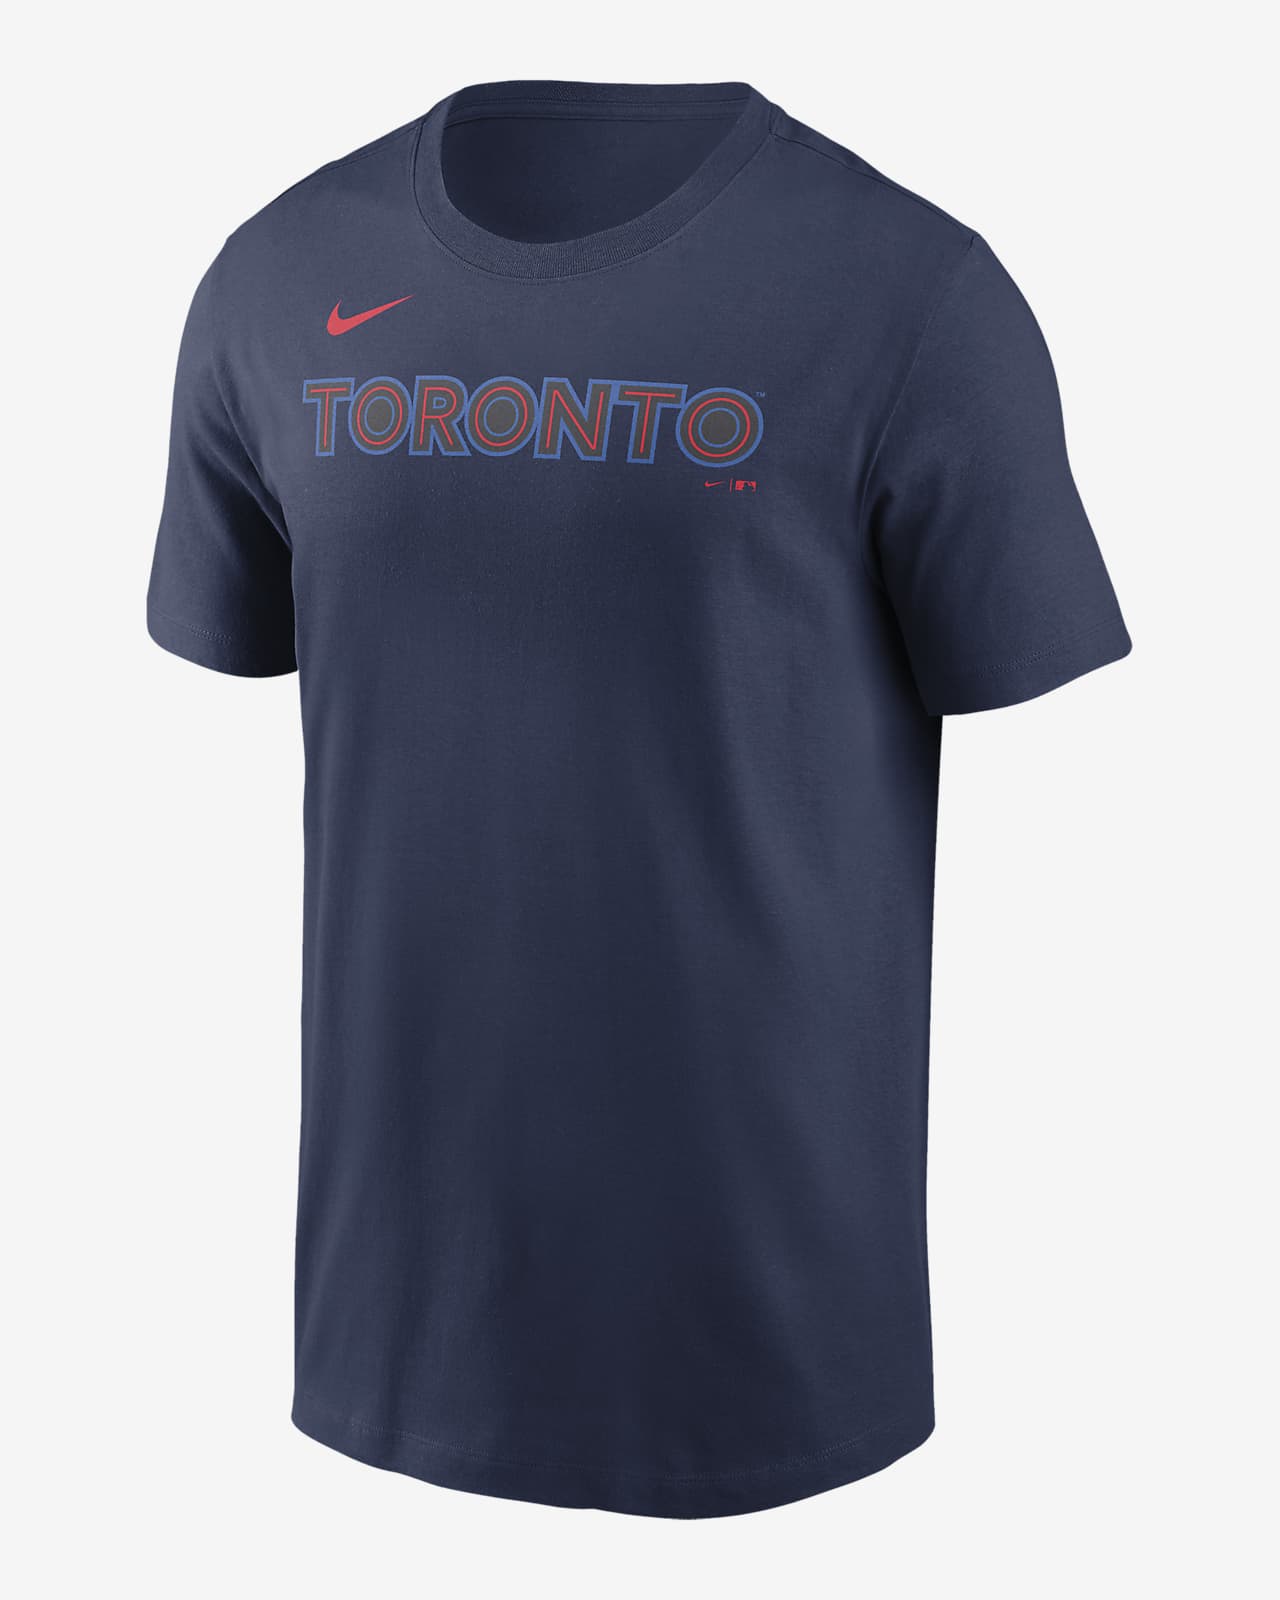 Playera Nike de la MLB para hombre Toronto Blue Jays City Connect Wordmark